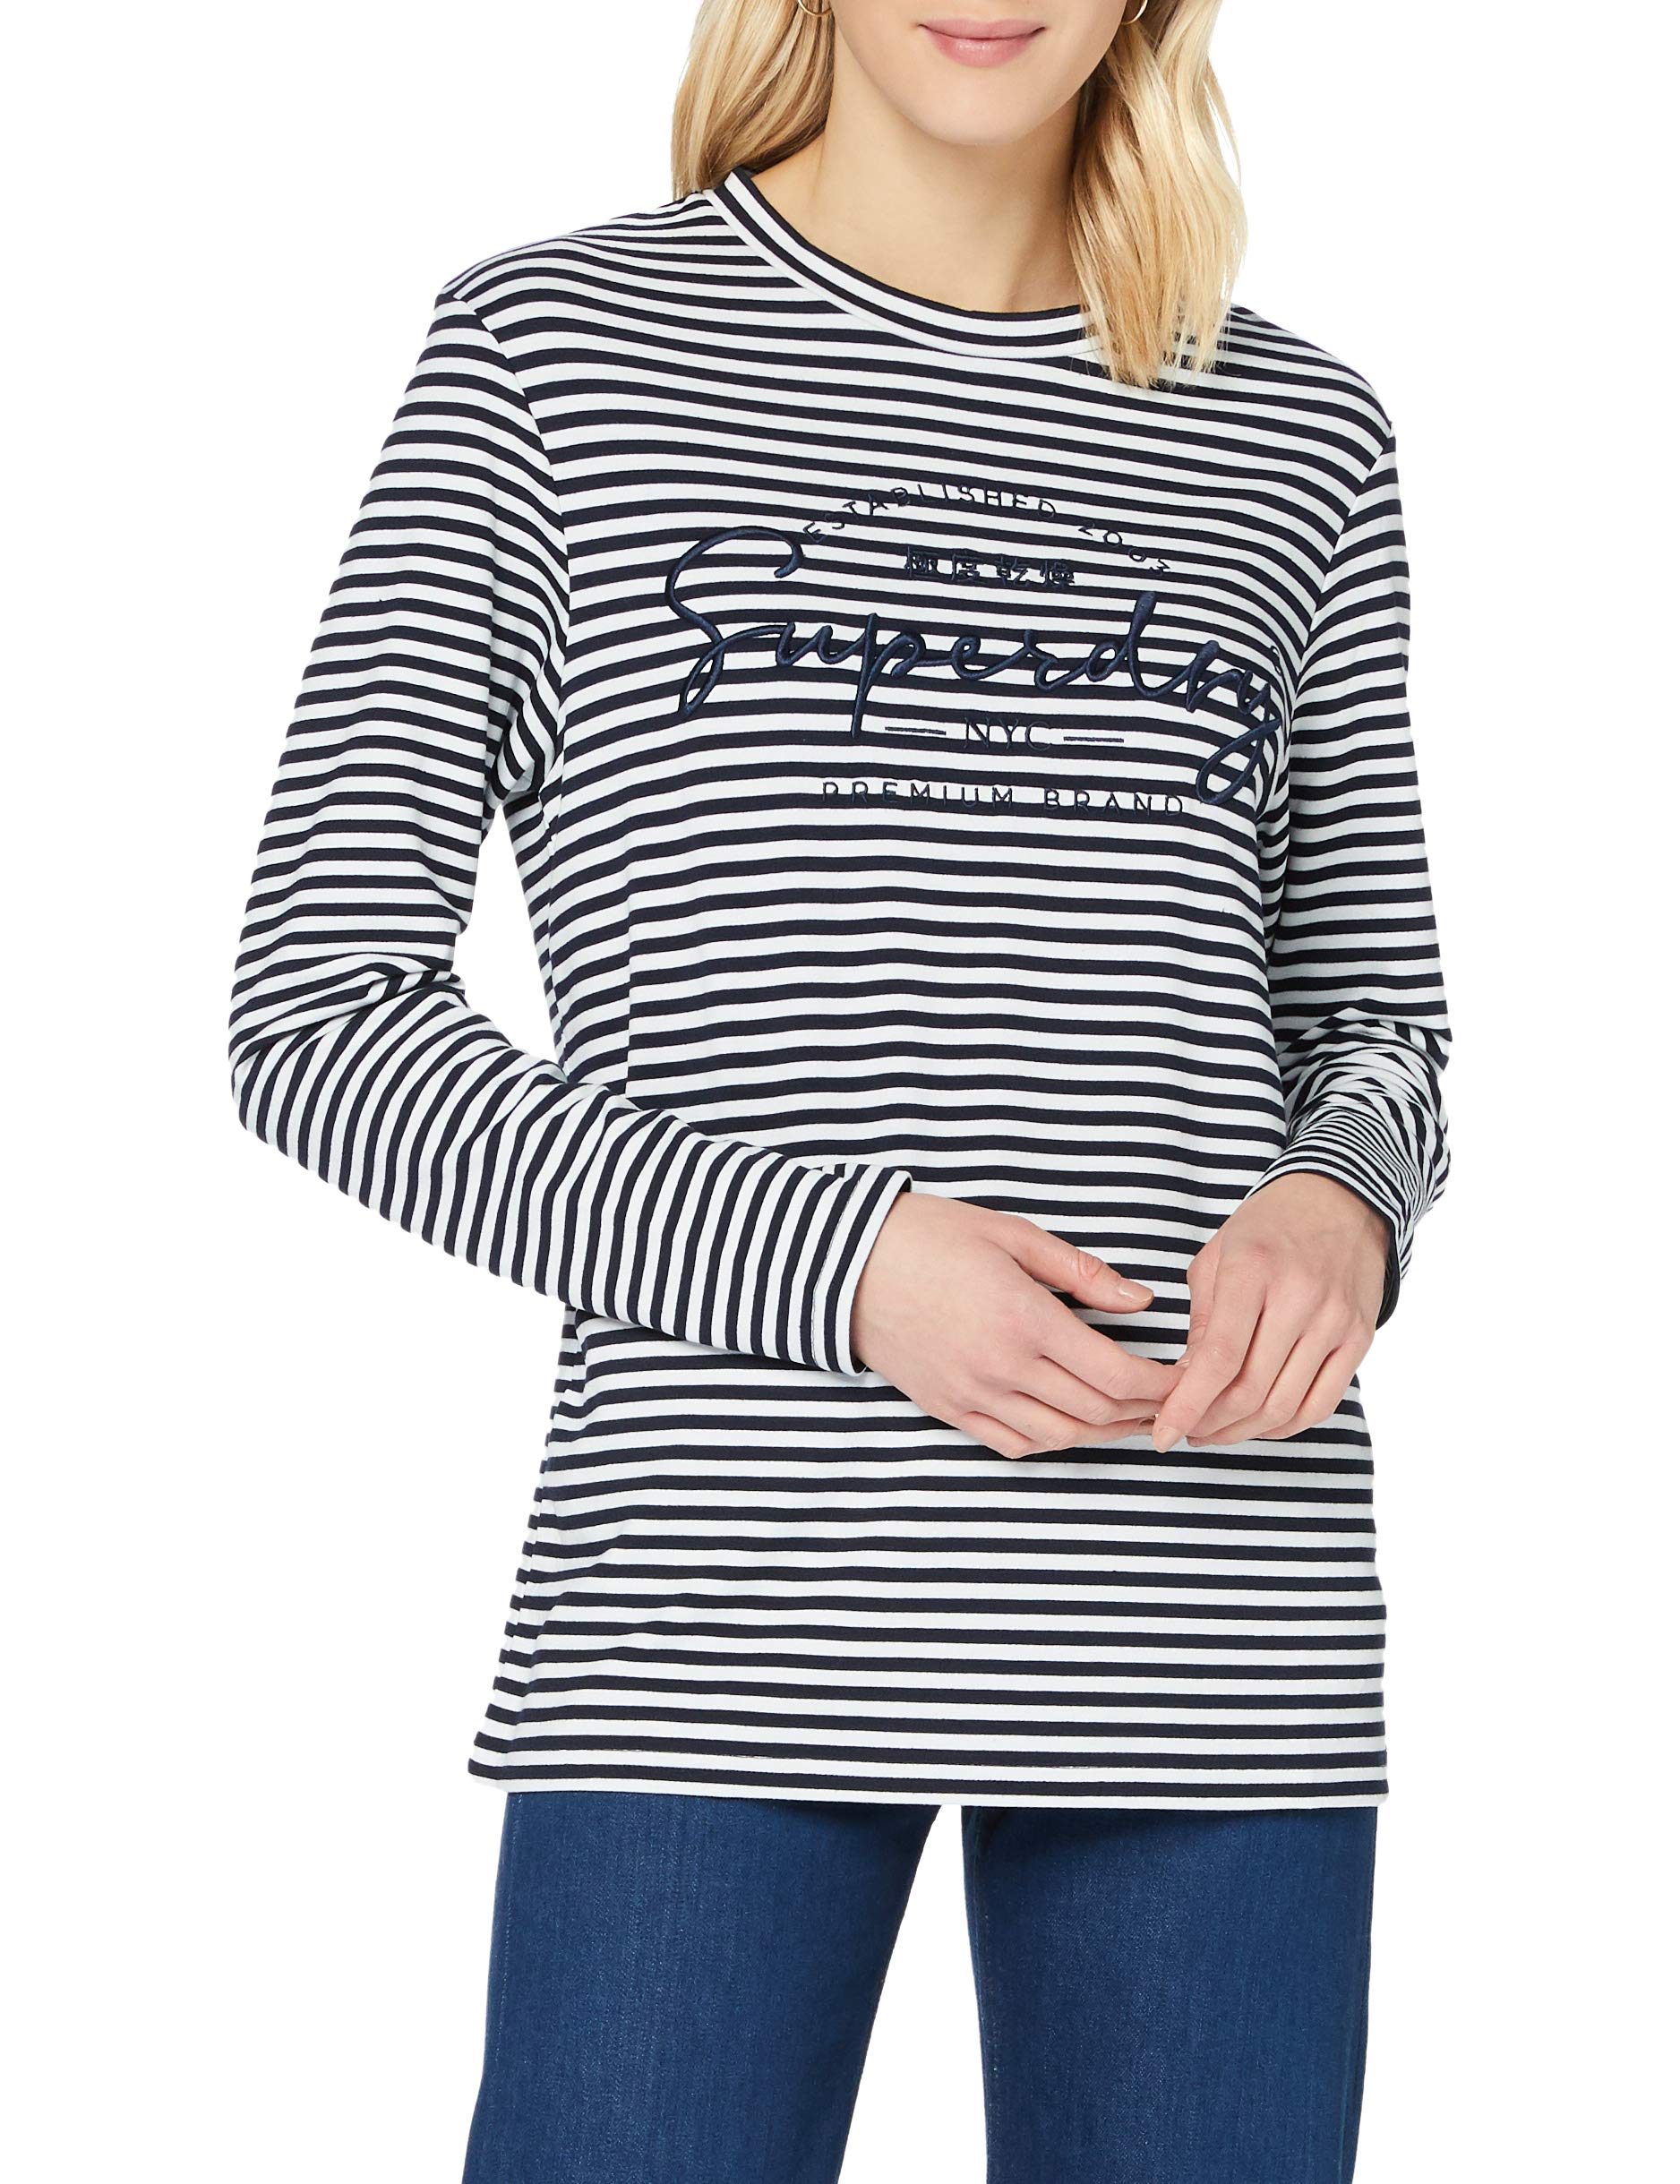 Superdry Damen Stripe Graphic Nyc Top T Shirt, Nautical Navy Stripe, 38 EU